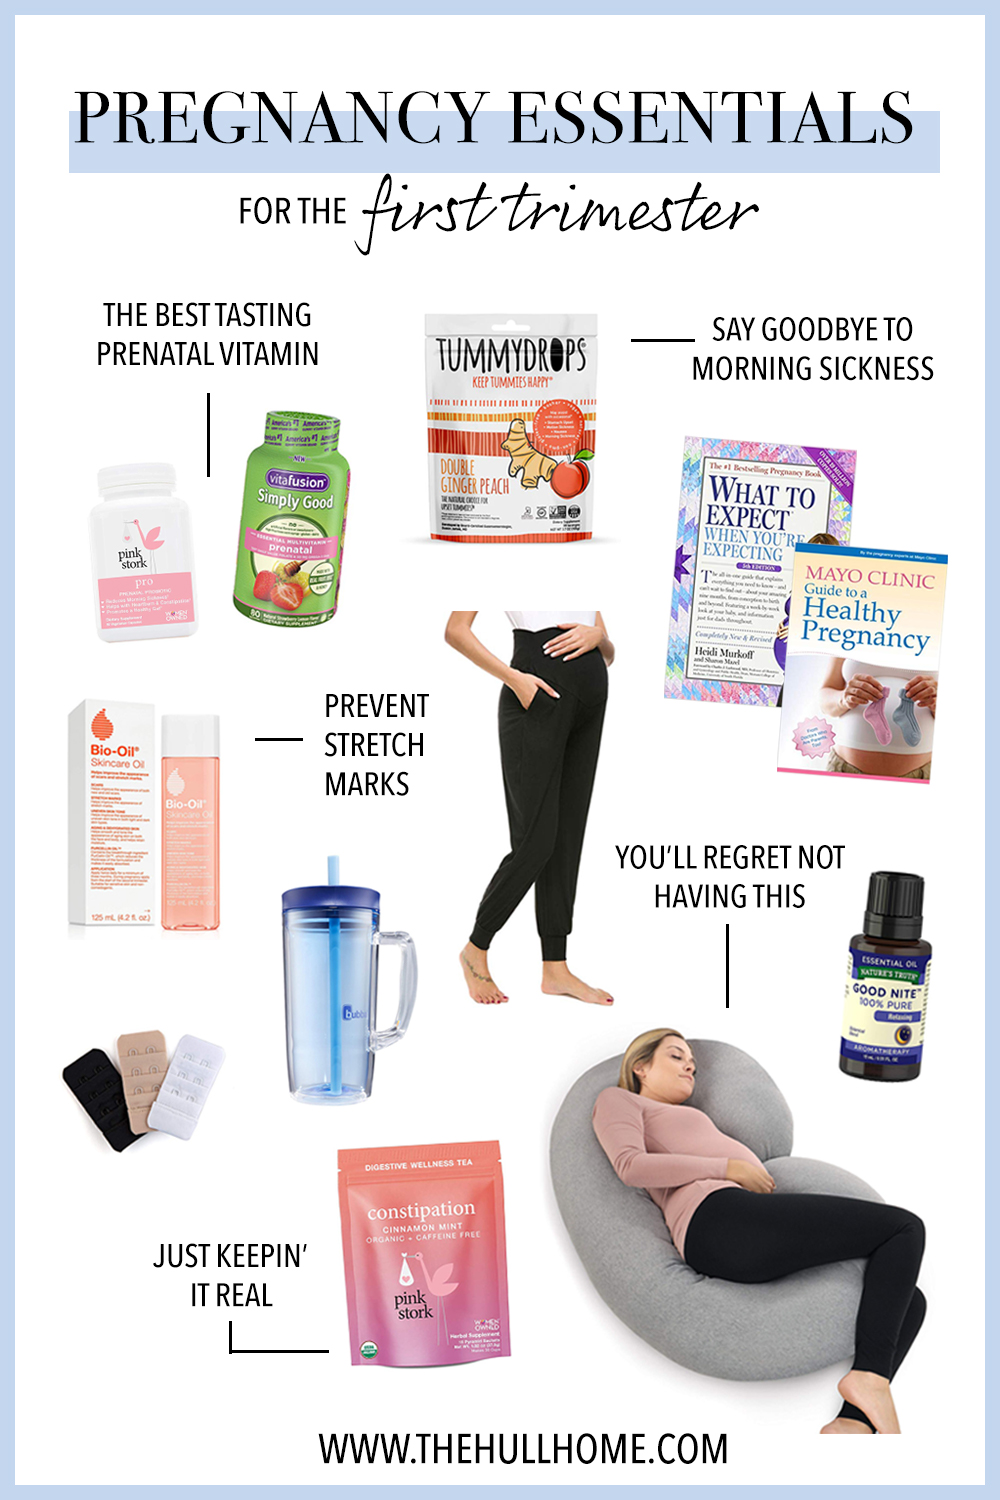 Wellness Essentials Pregnancy